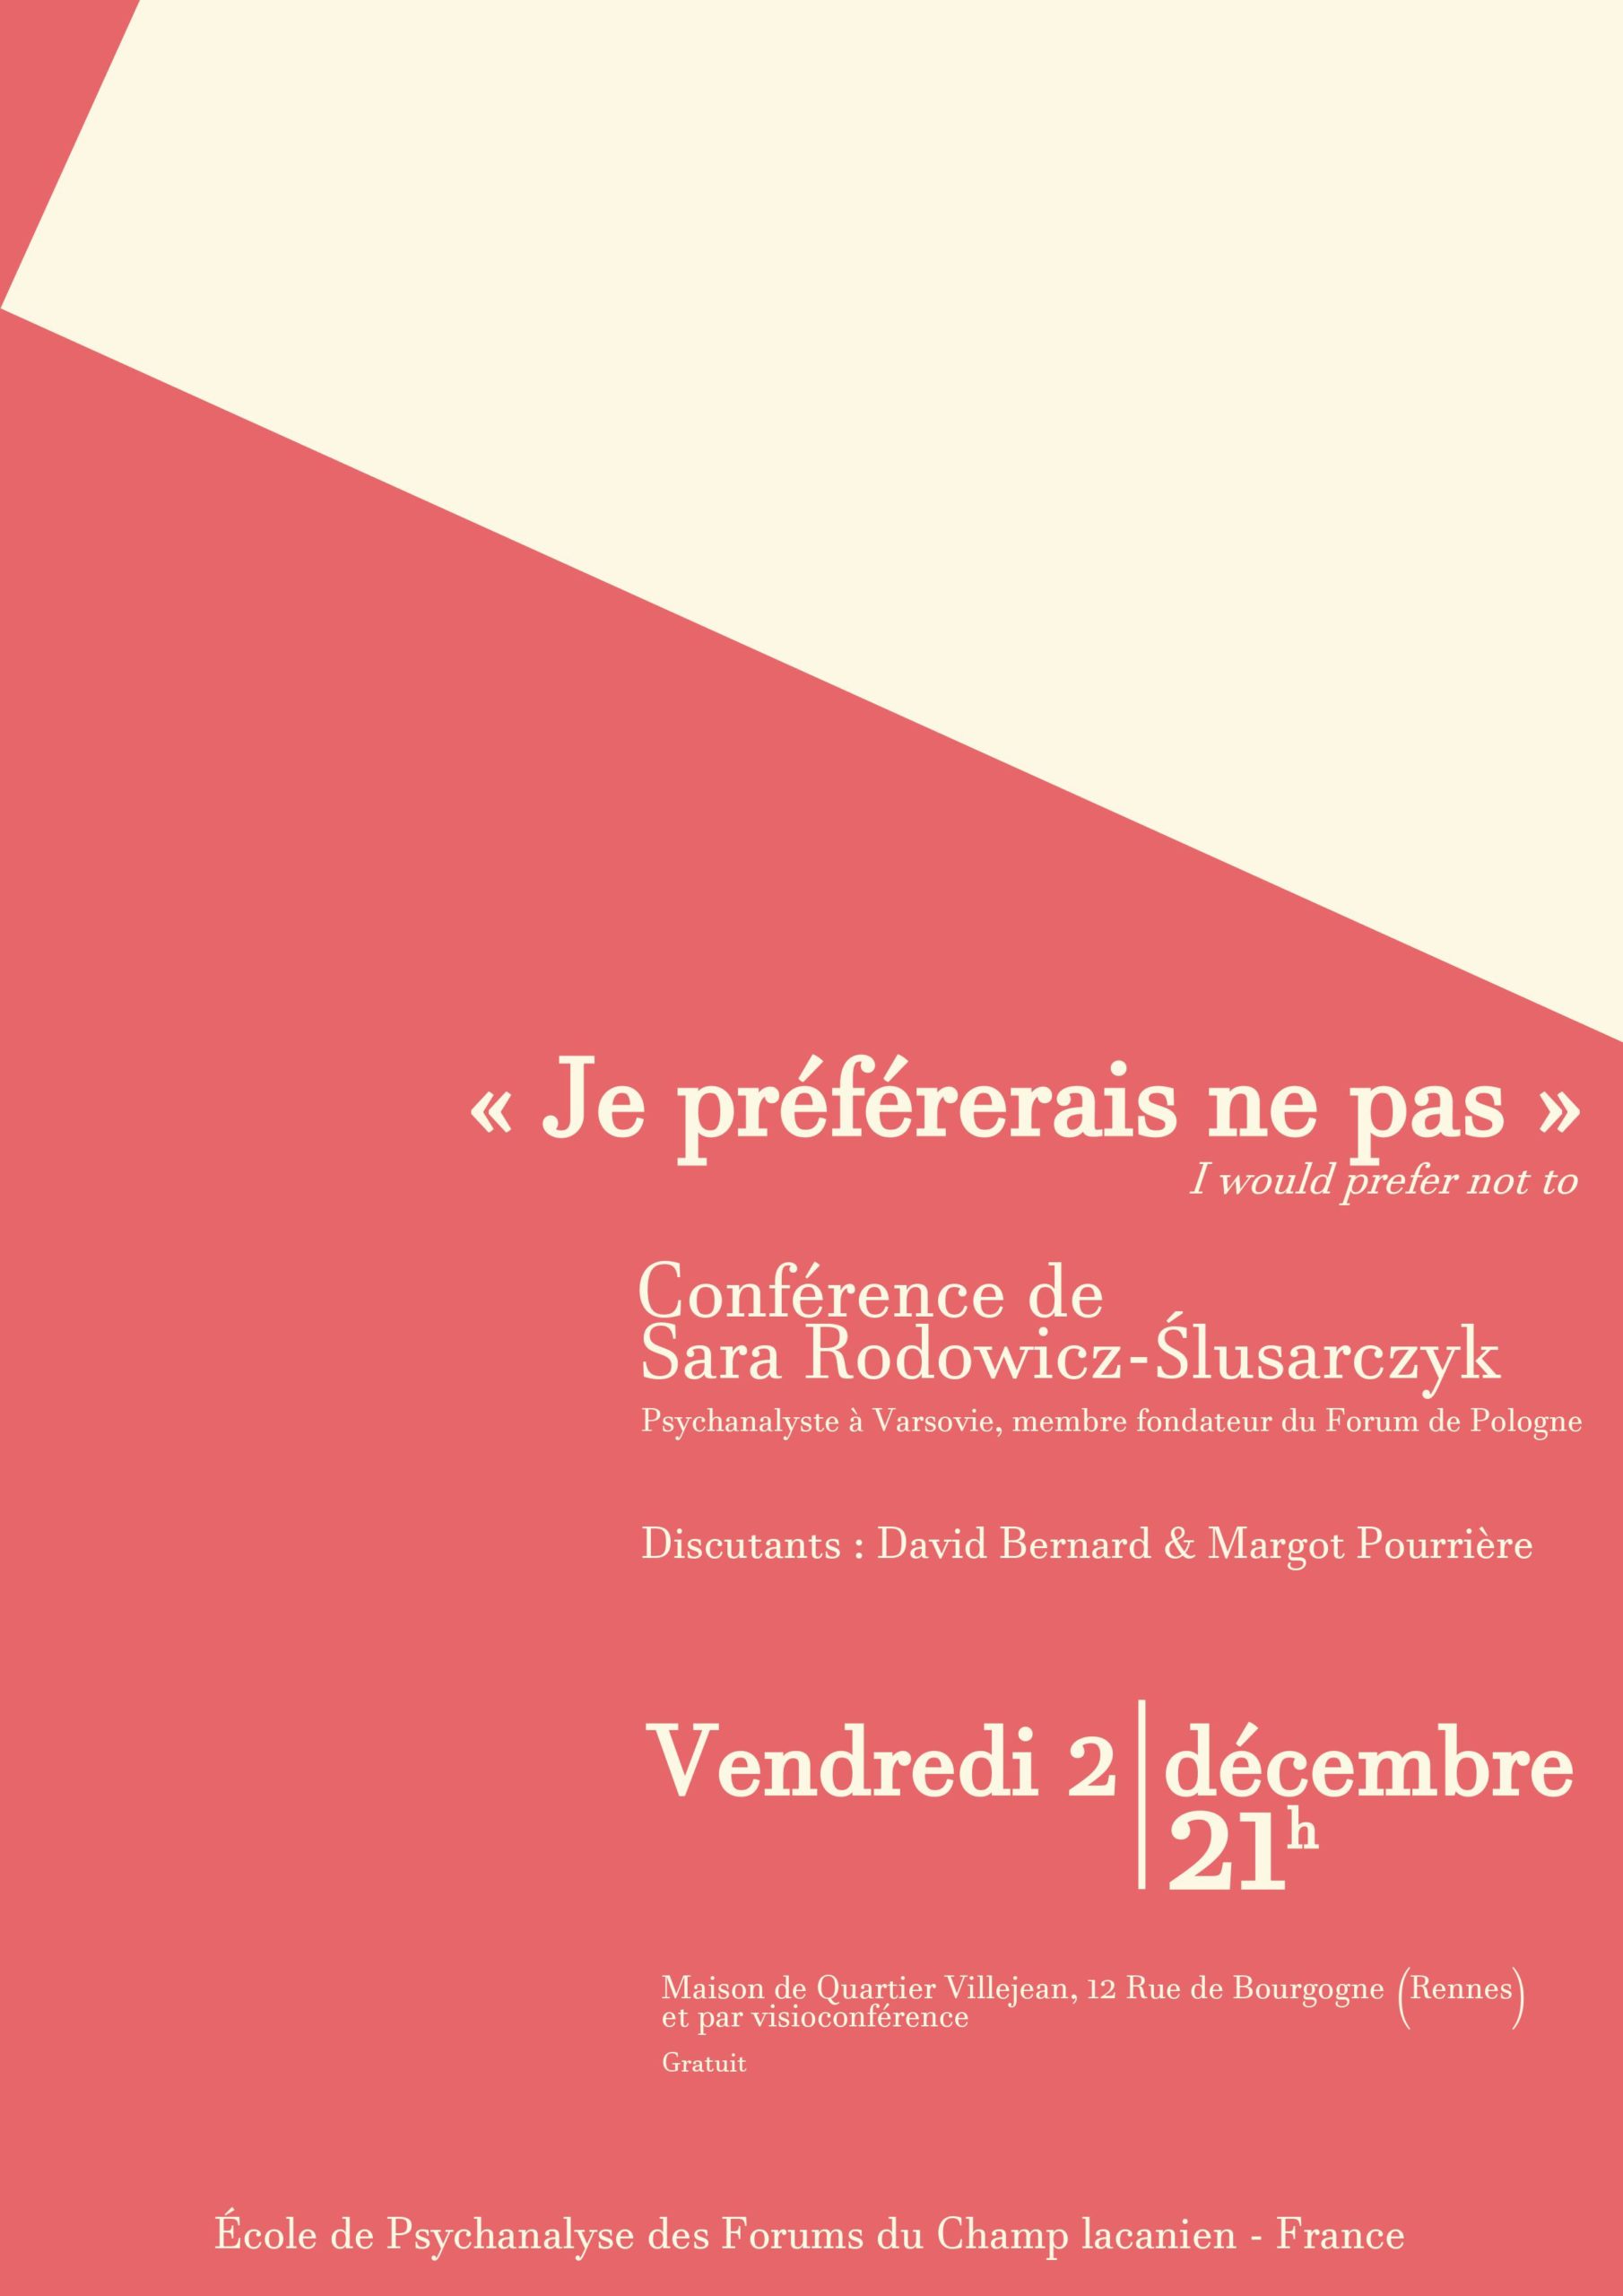 ANNULATION Conférence de Sara Rodowicz-Slusarczyk - "Je préférerais ne pas"